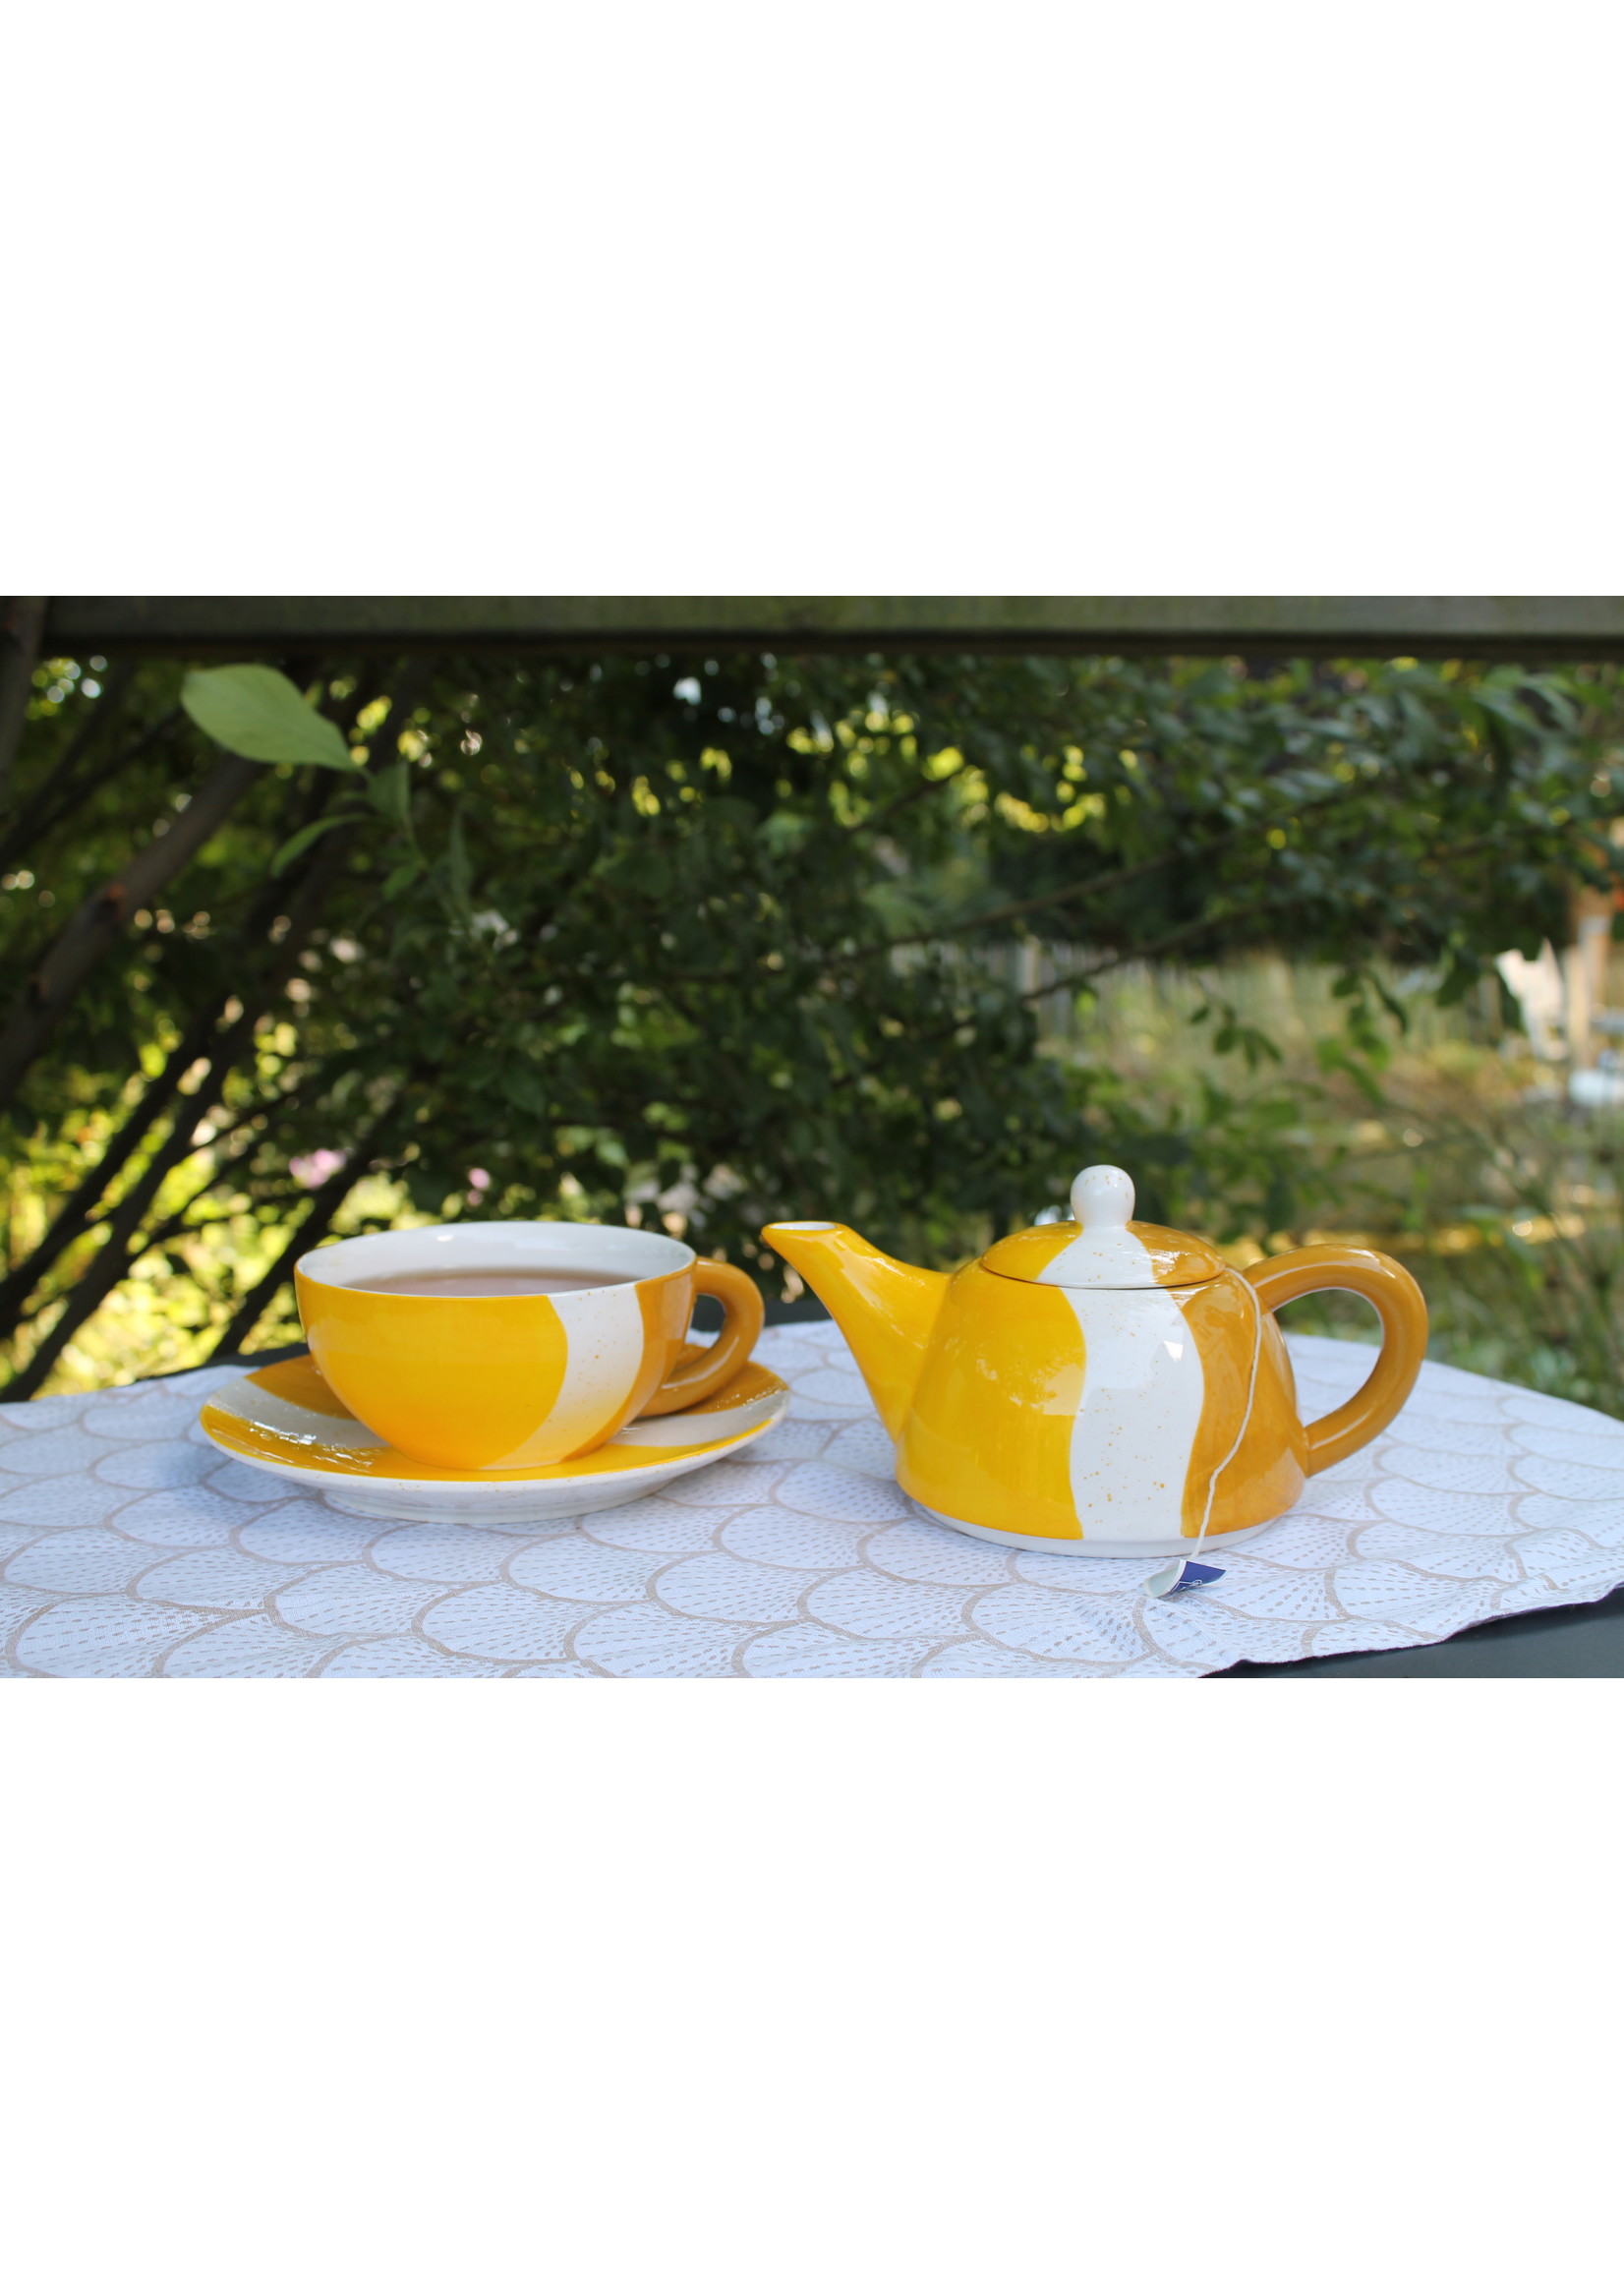 J-Line J-Line Tea For One Golf Porselein Wit/Oker, leuke theepot voor zalig kopje thee en momentje voor jezelf!